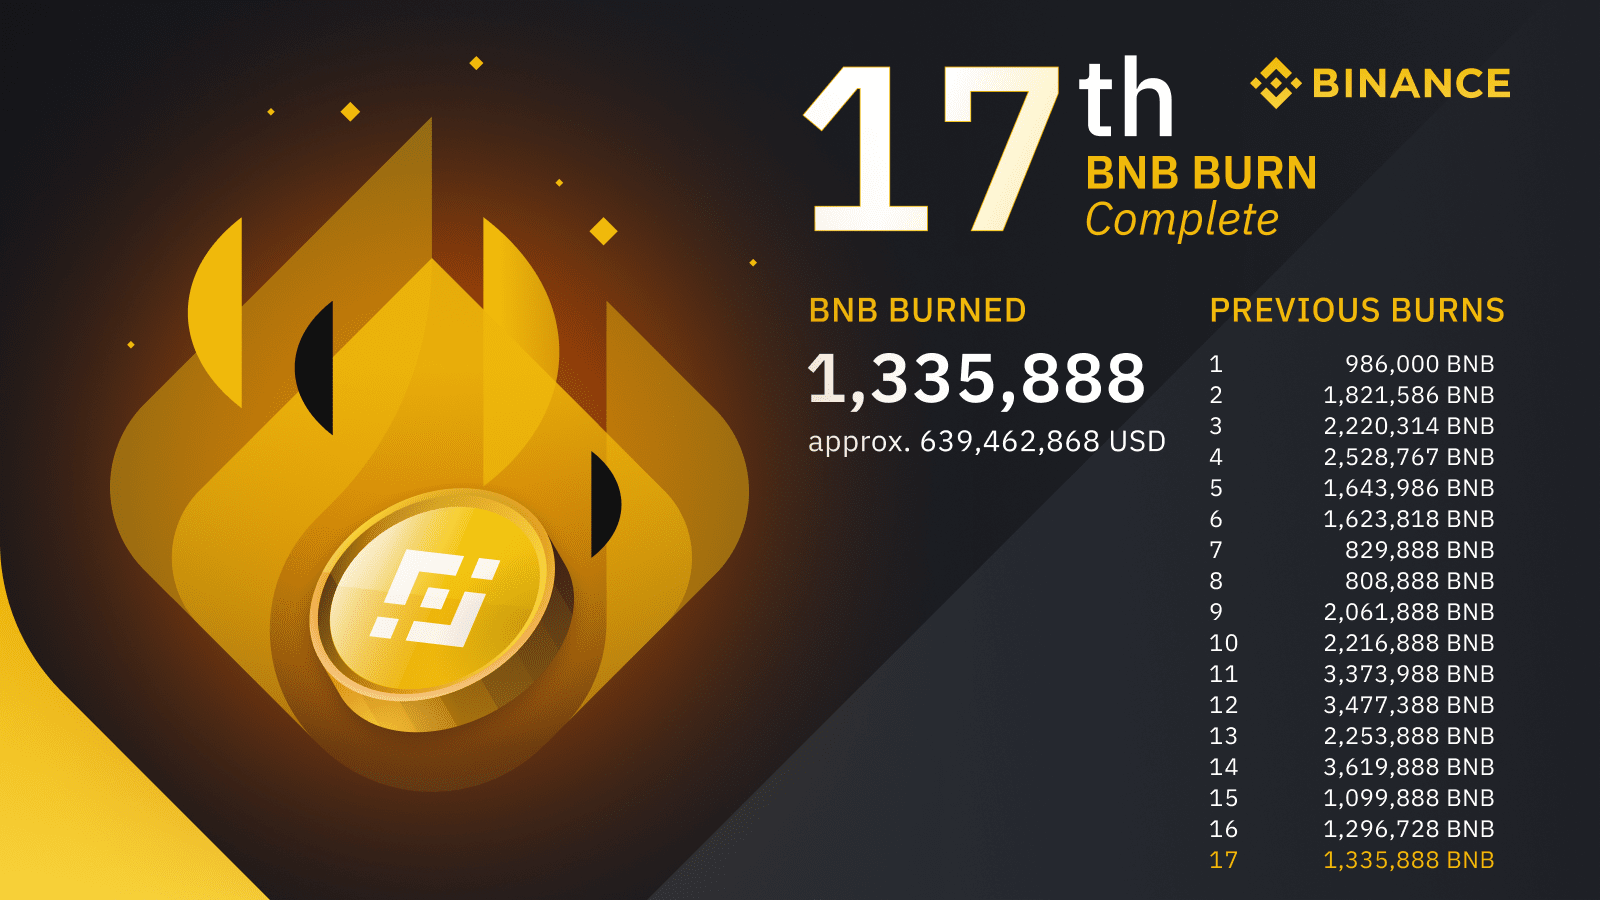 Binance «сожгла» 1.3 million BNB worth $640 million - Bits Media